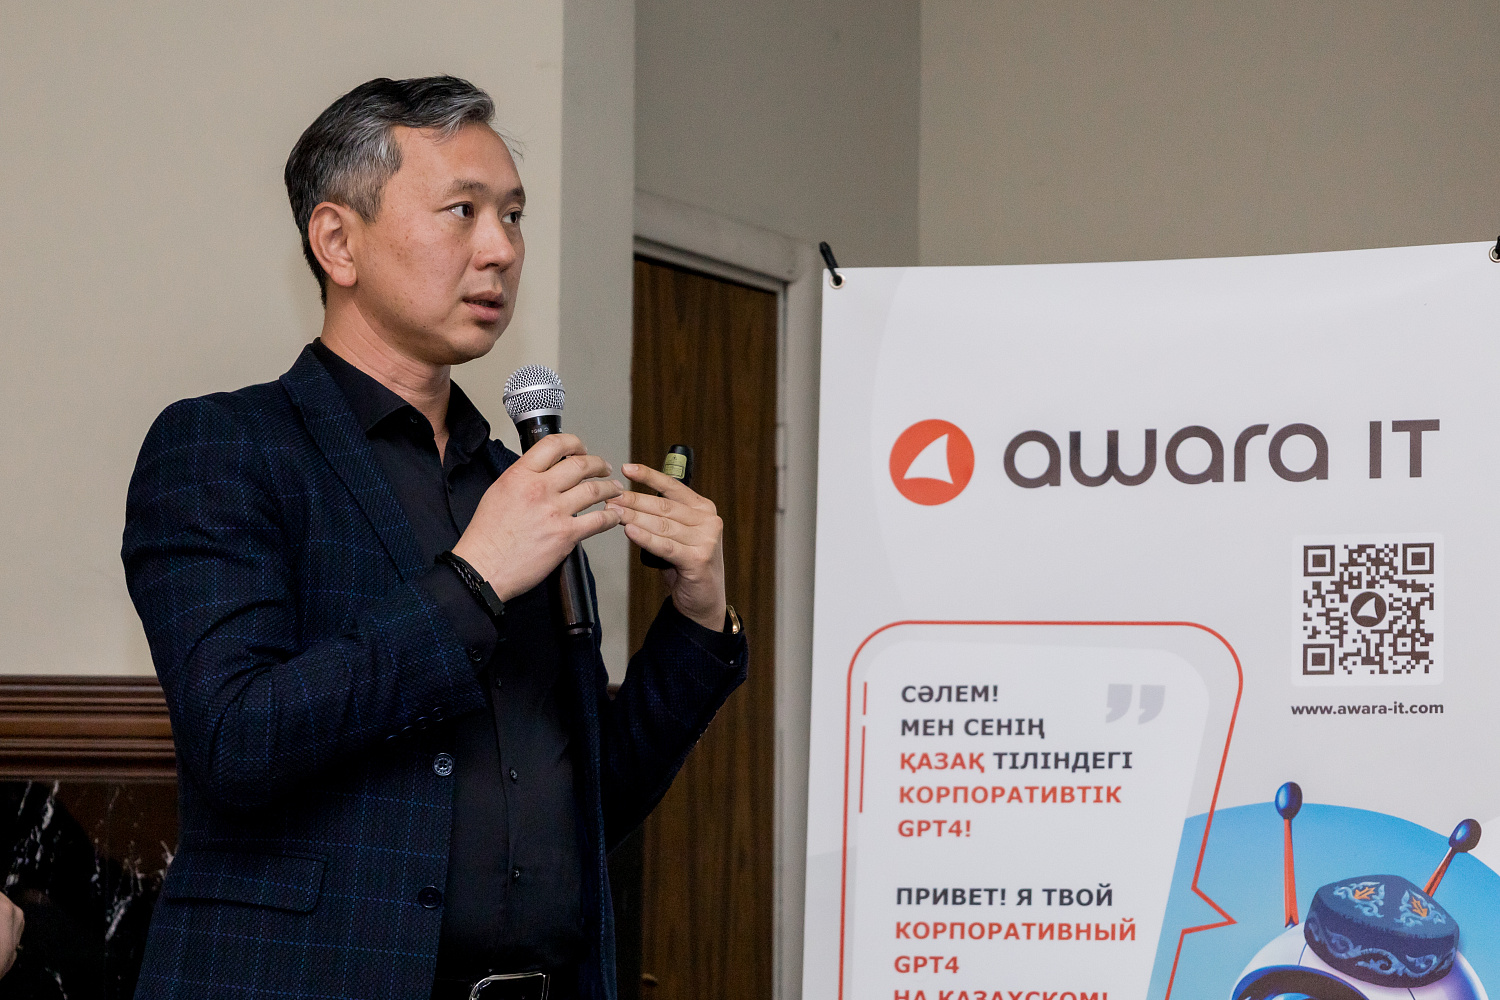 Awara IT Unveils Revolutionary Kazakh-Language AI Chatbot at Exclusive Breakfast Event